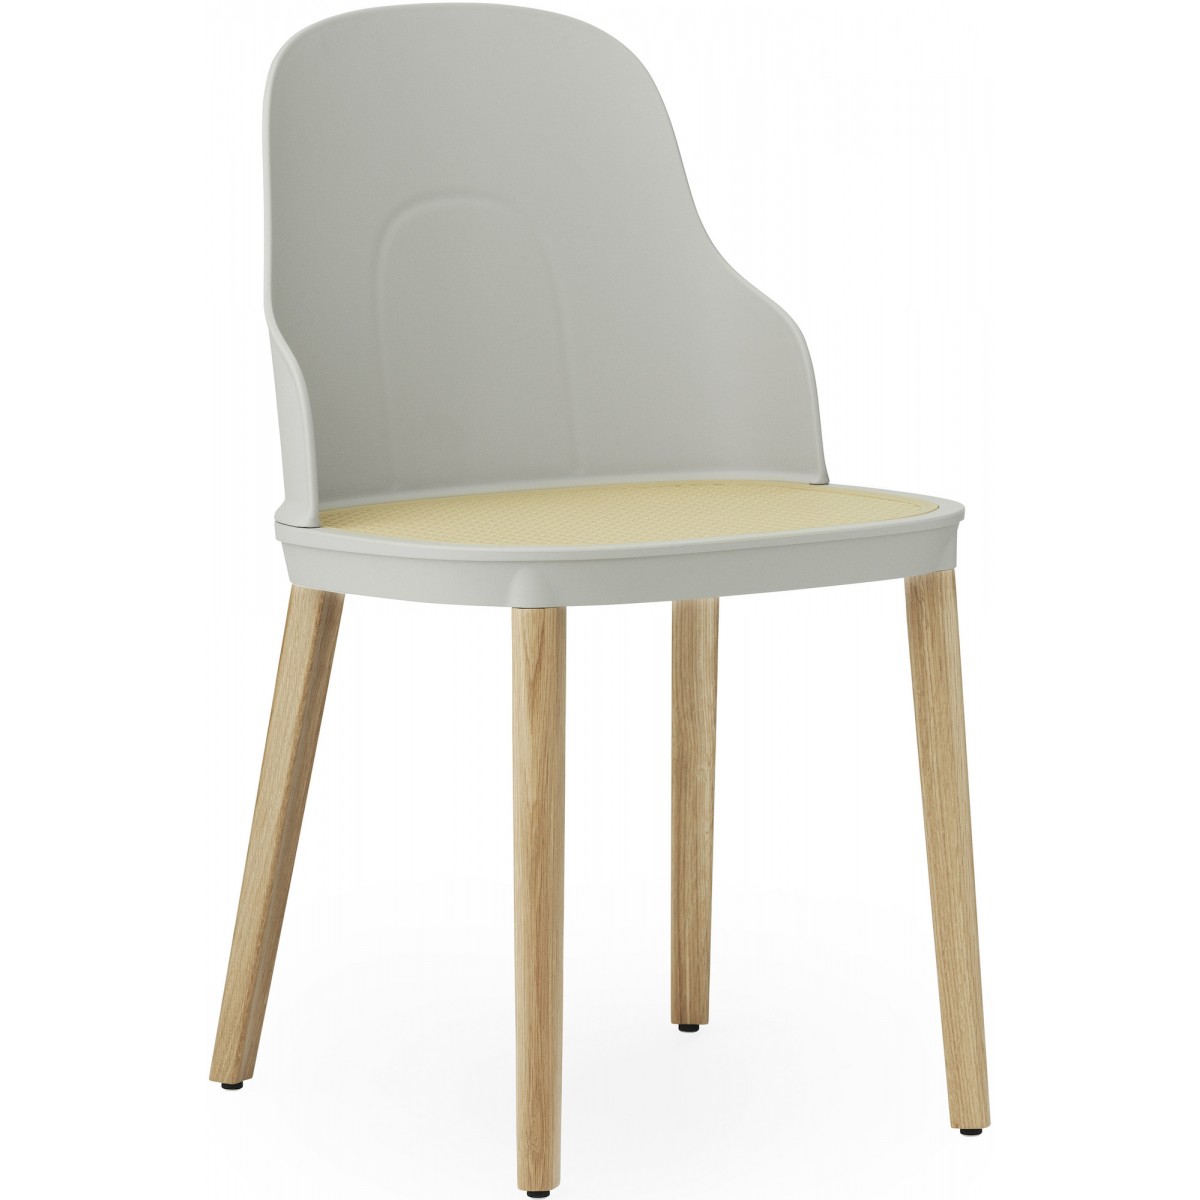 Warm grey / braided seat / Oak – Allez Chair